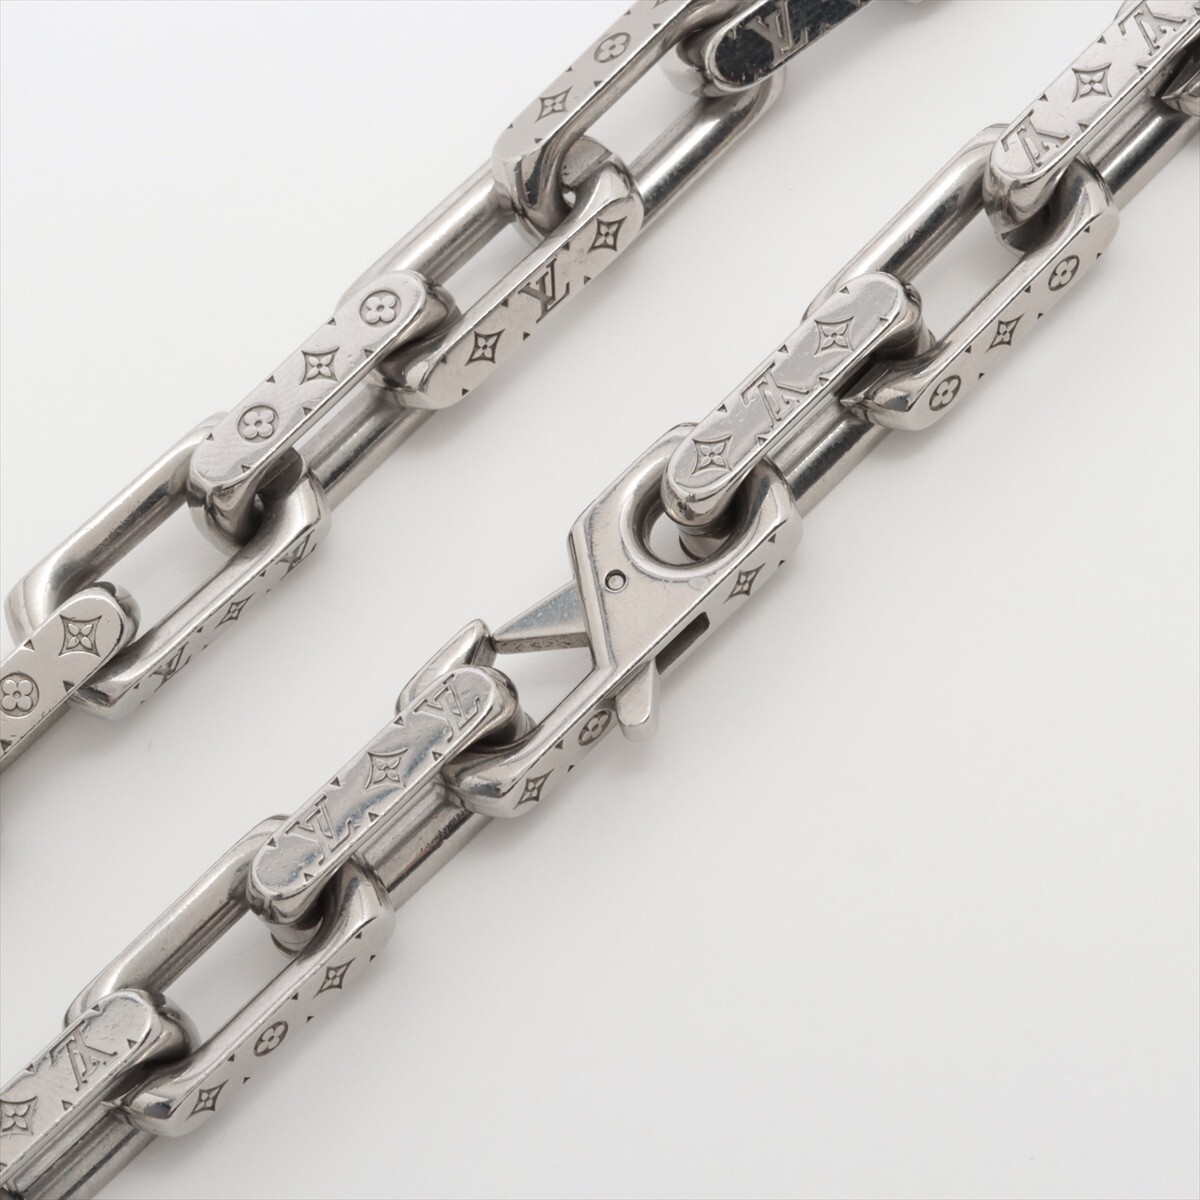  Louis Vuitton necklace * chain monogram kolieGP silver M00307 ST50a820